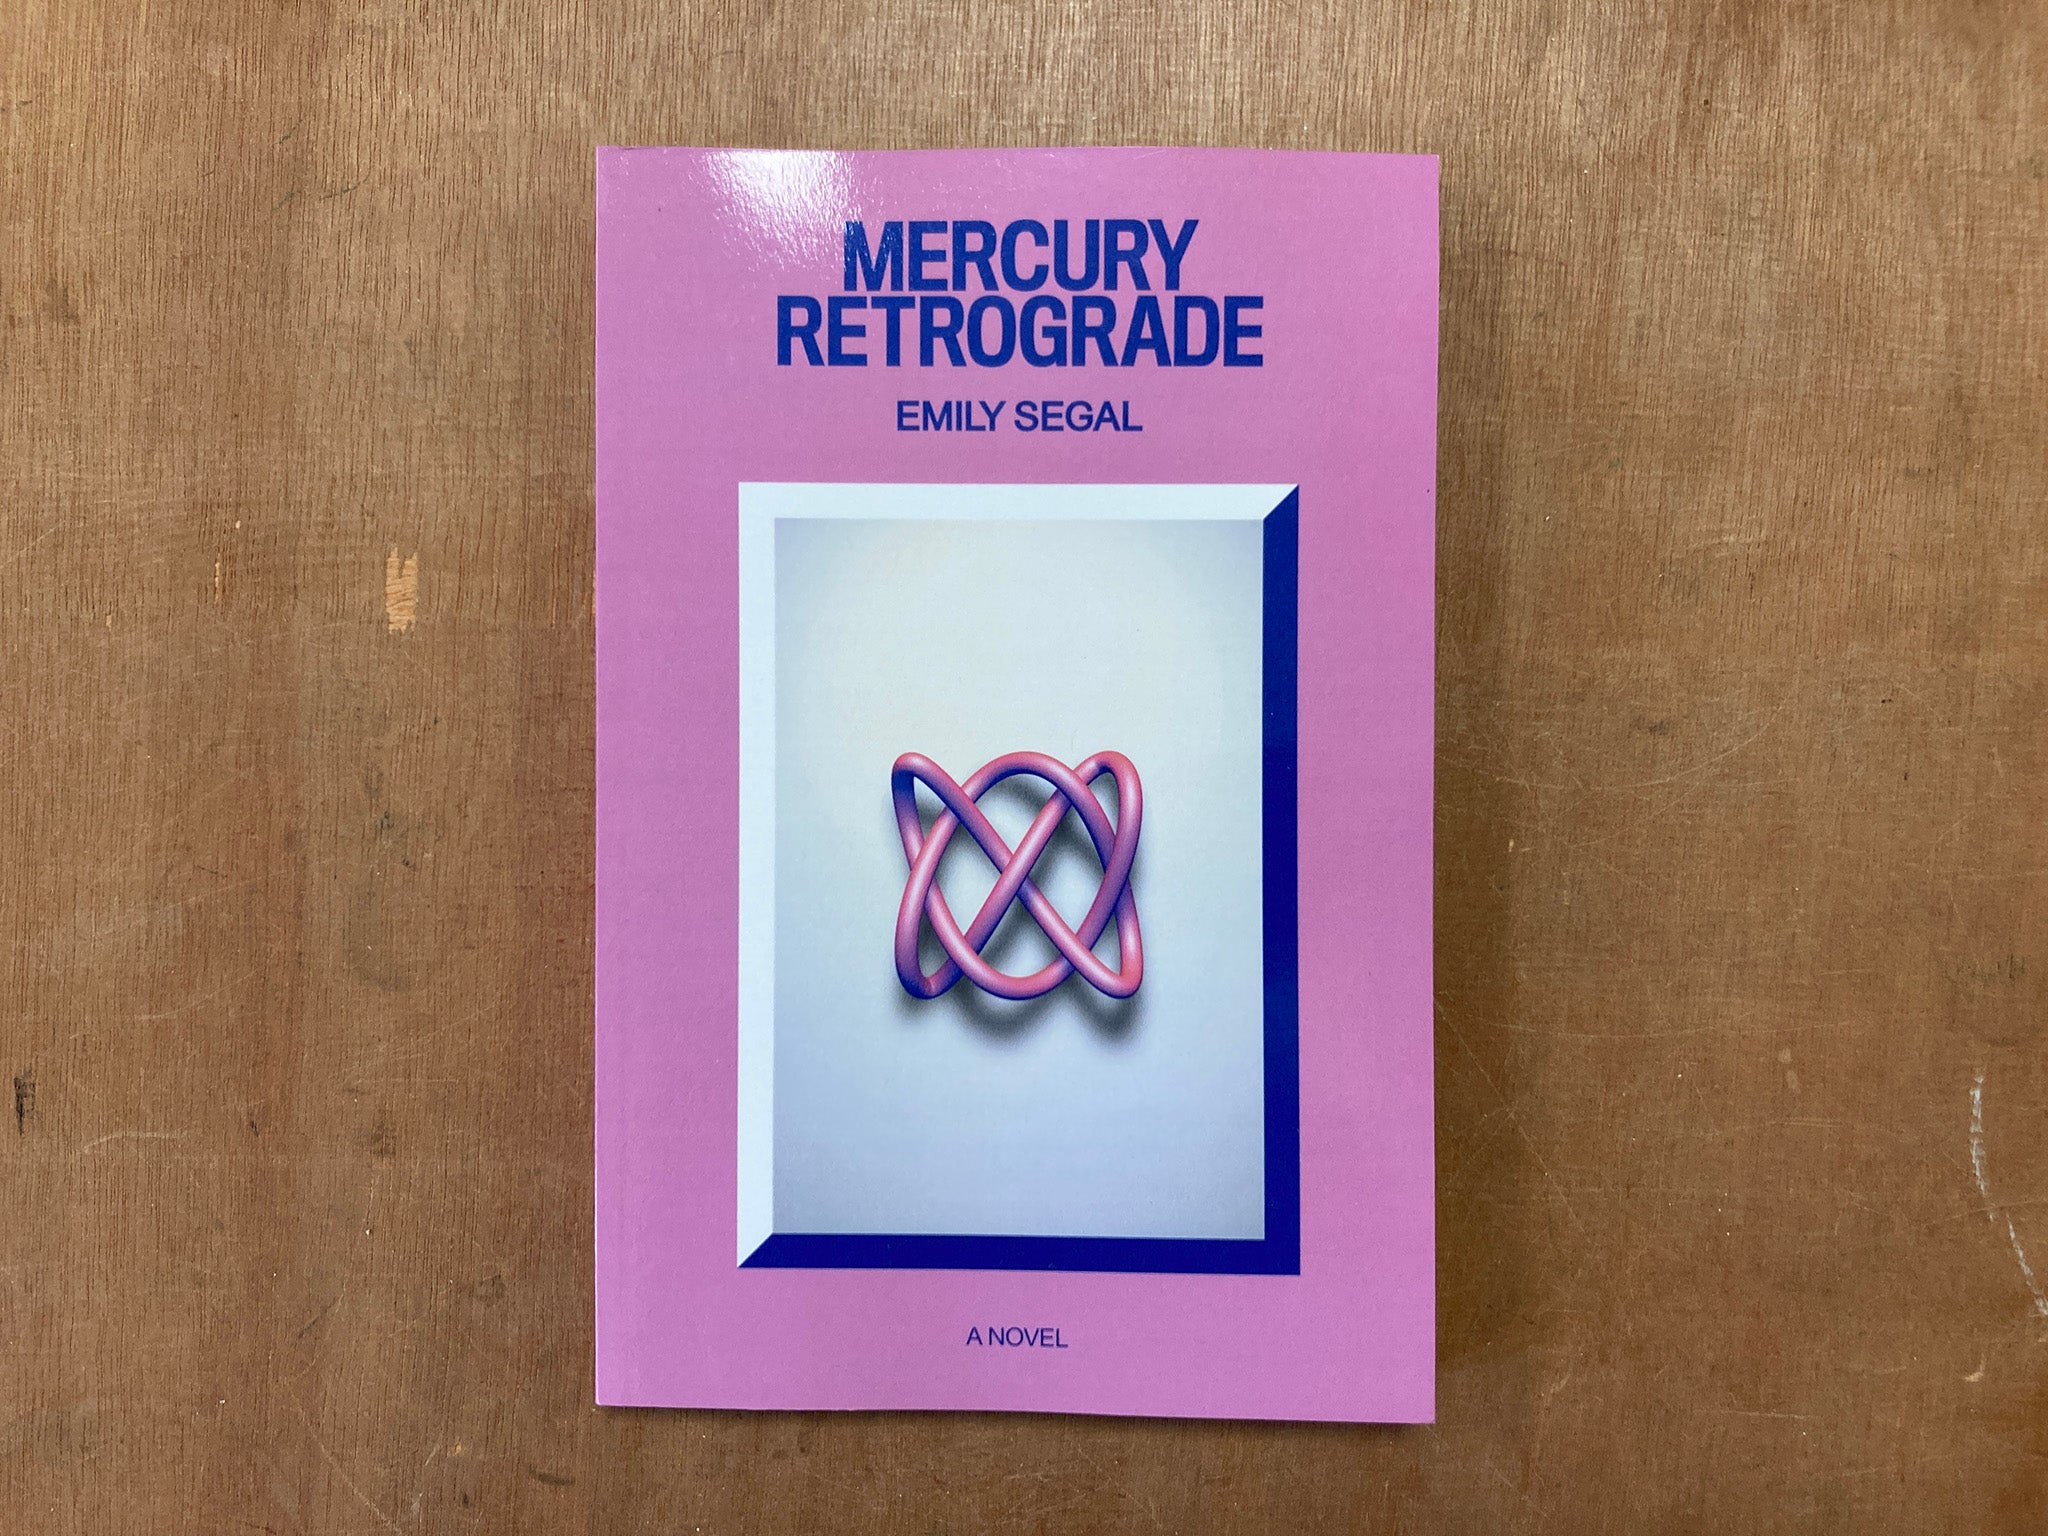 MERCURY RETROGRADE by Emily Segal